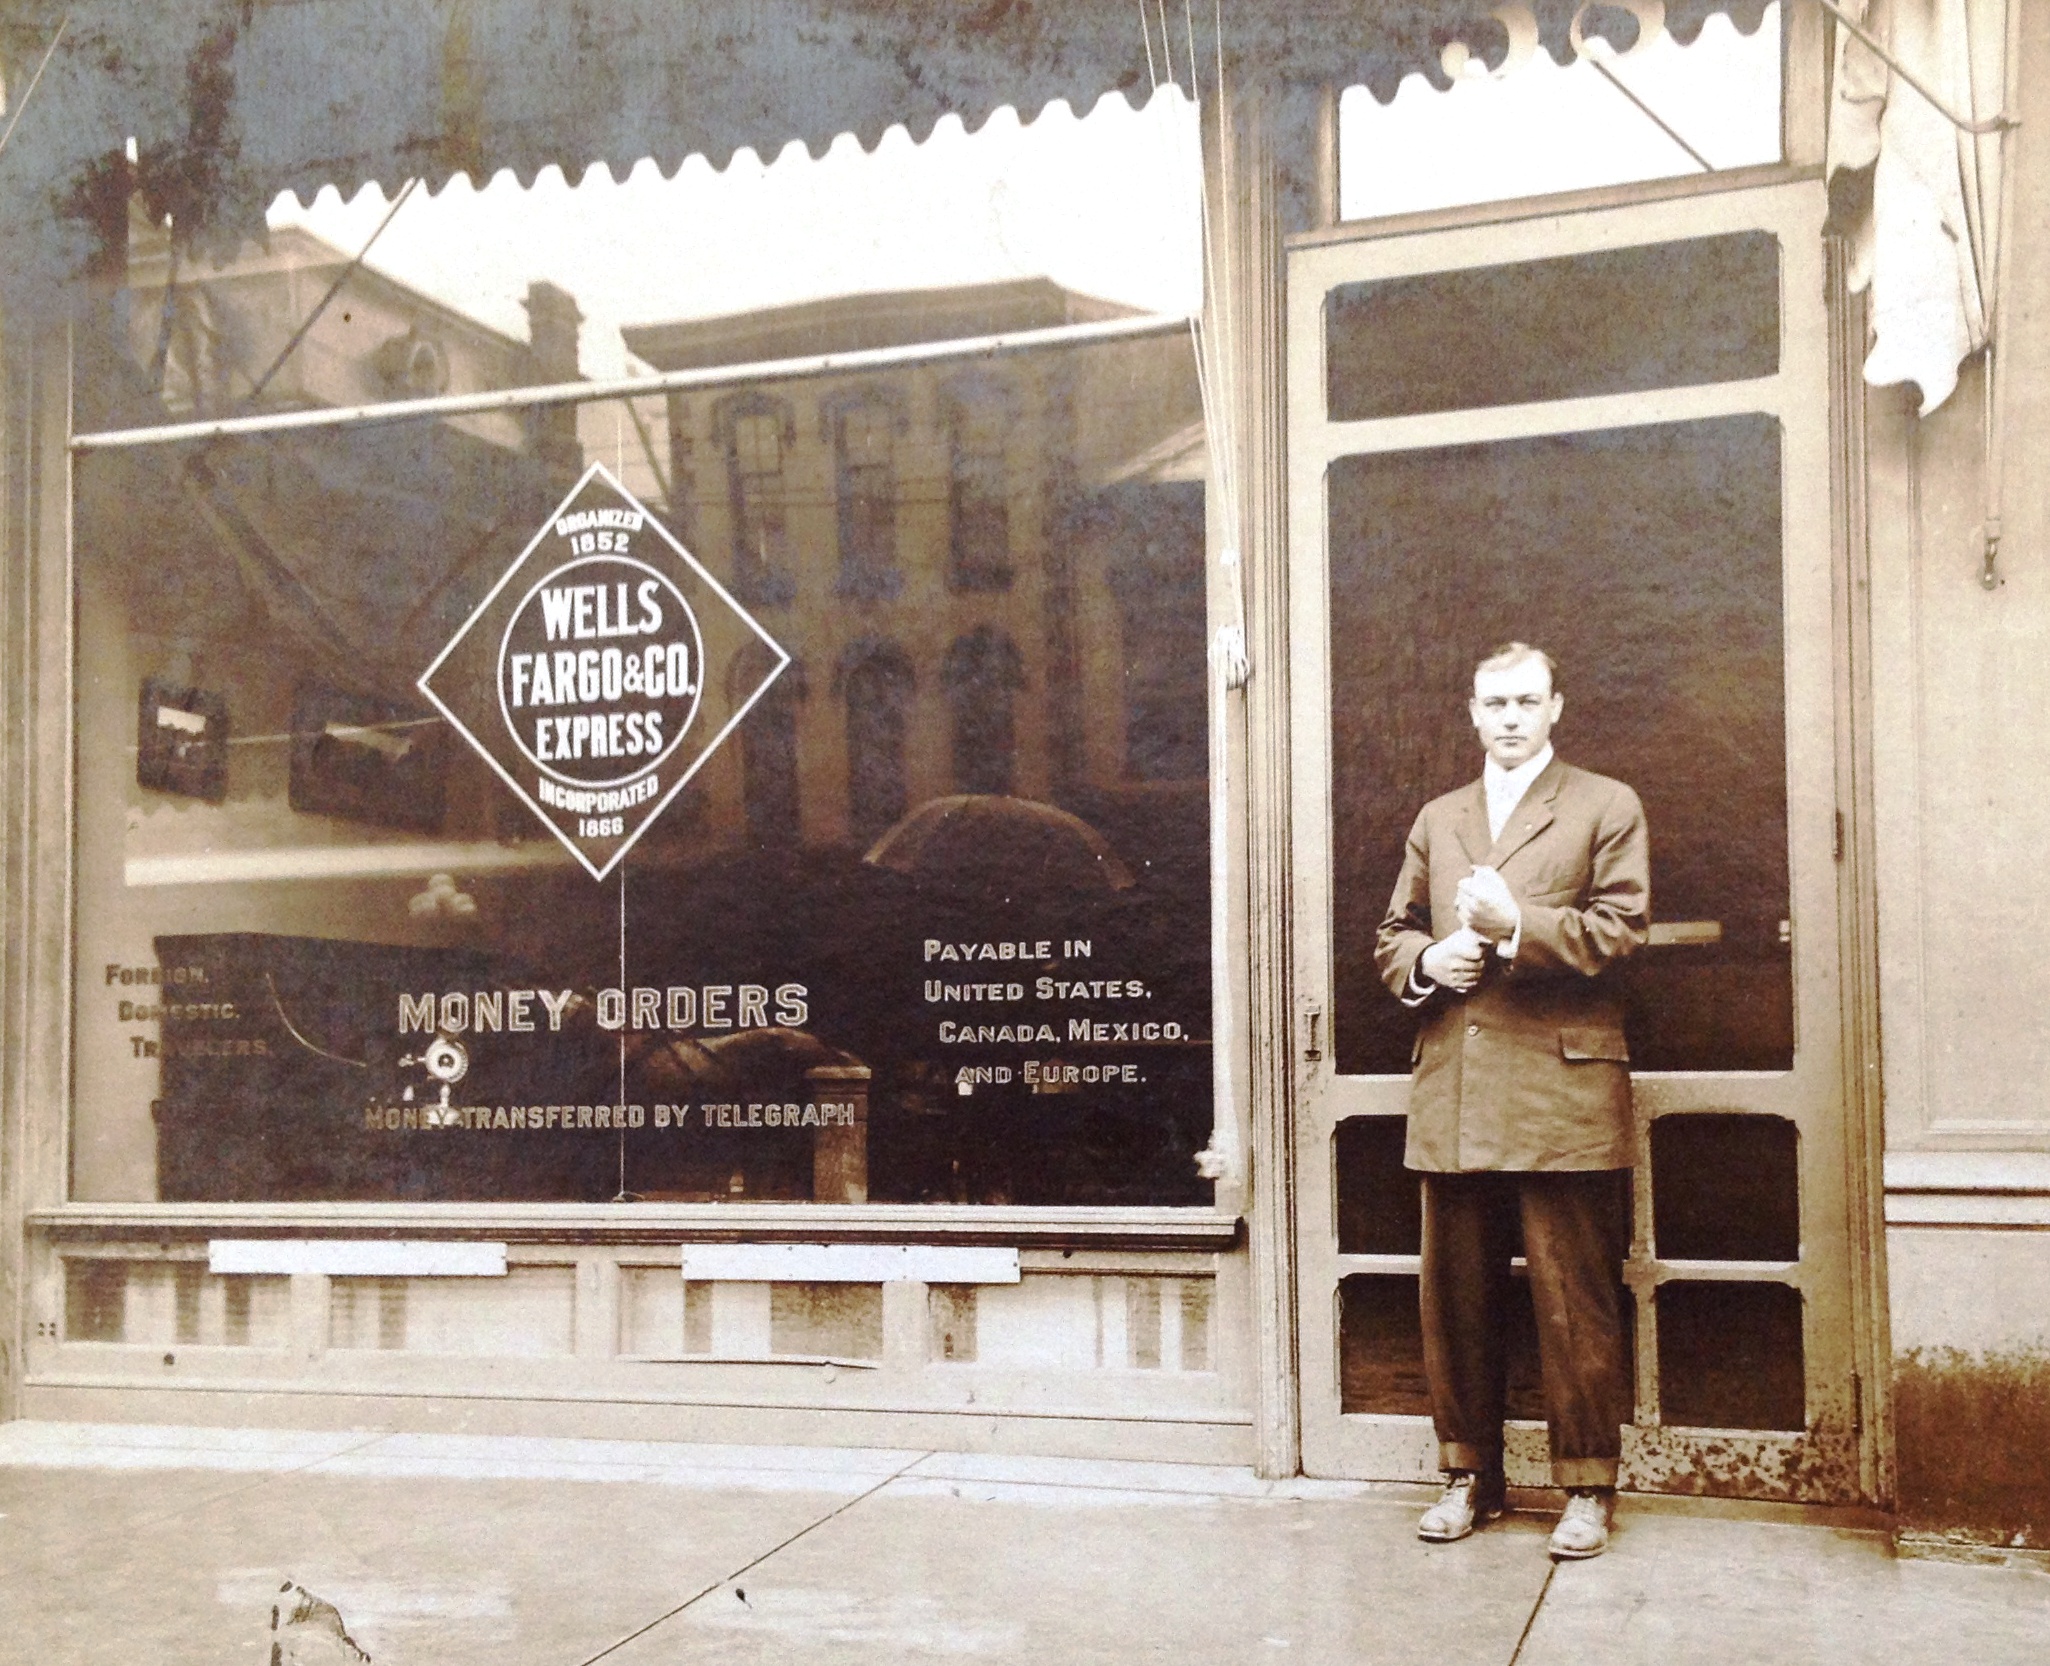 Wells Fargo & Co.'s Express Agency, Dayton, Ohio